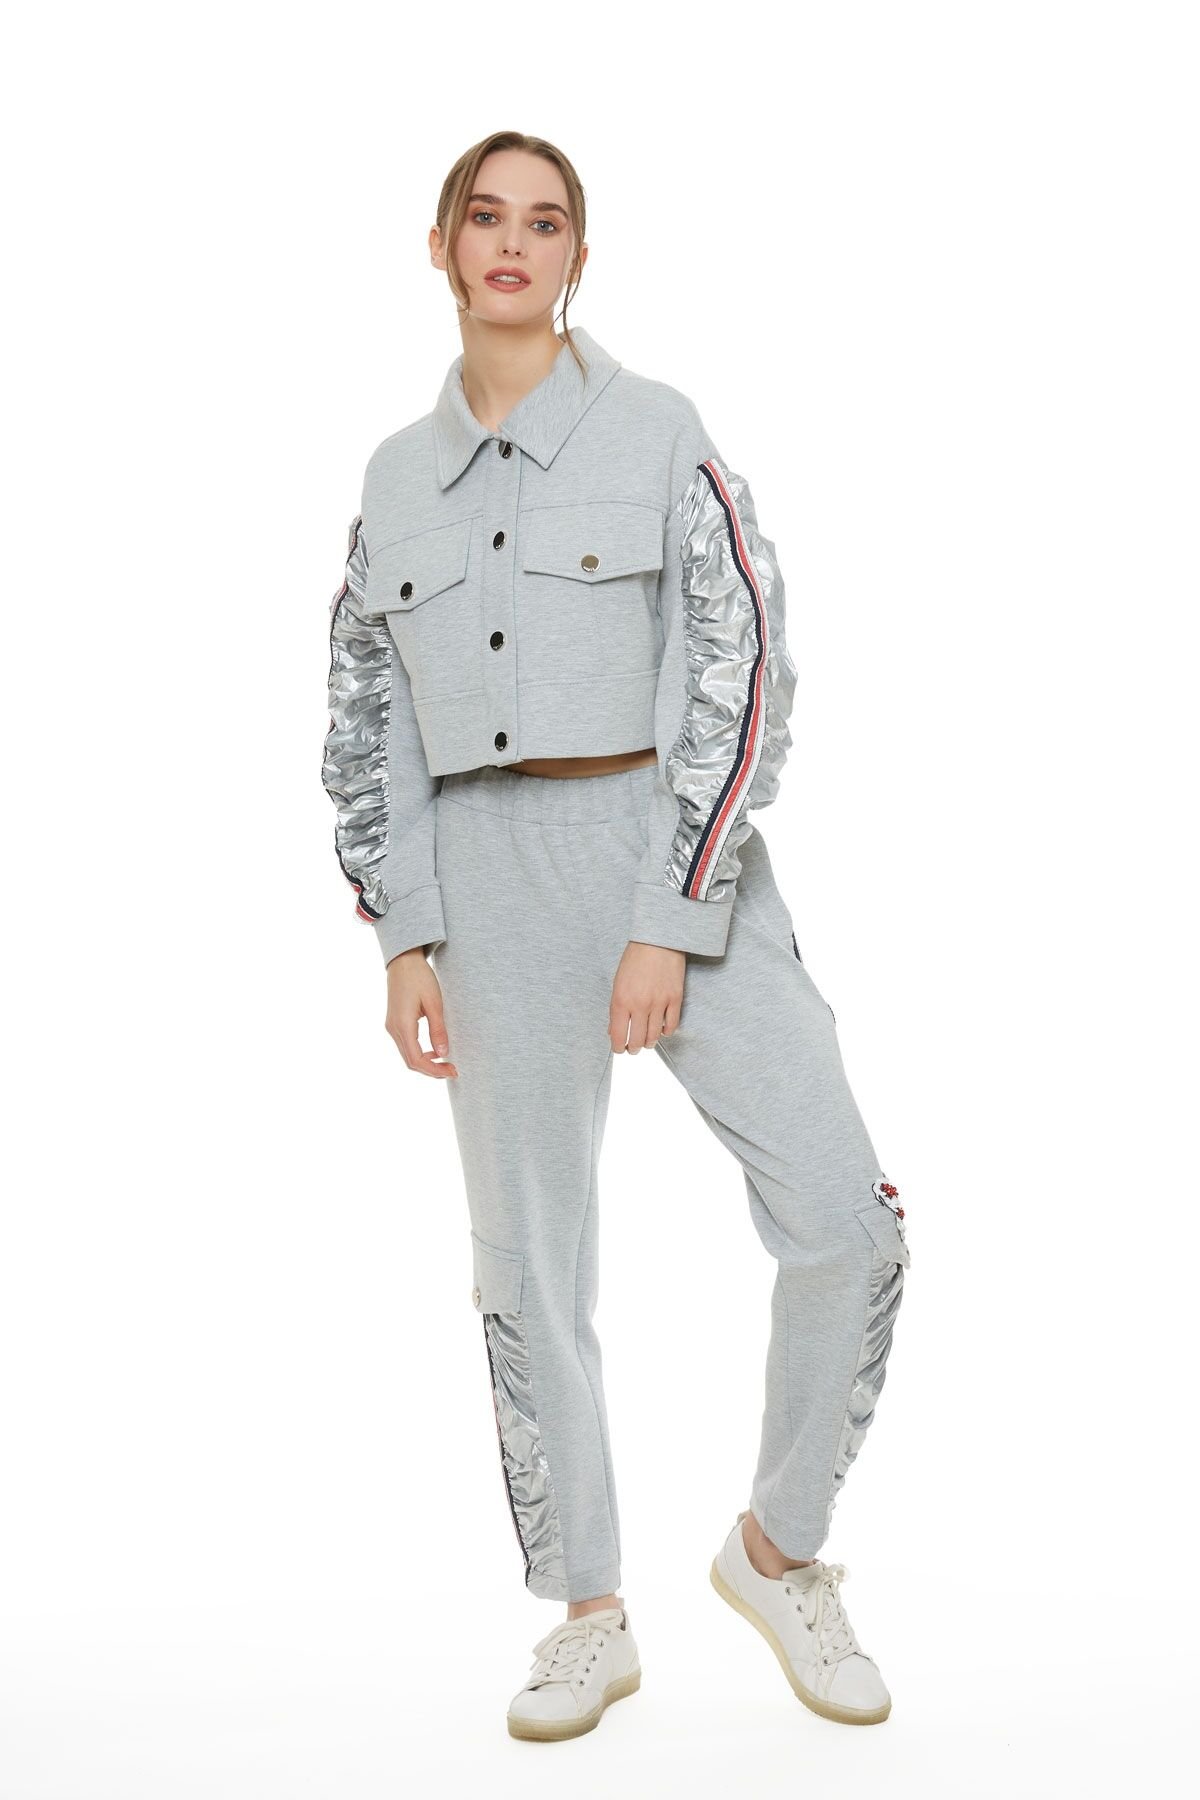 Stripe And Metallic Detailed Gray Sports Jacket